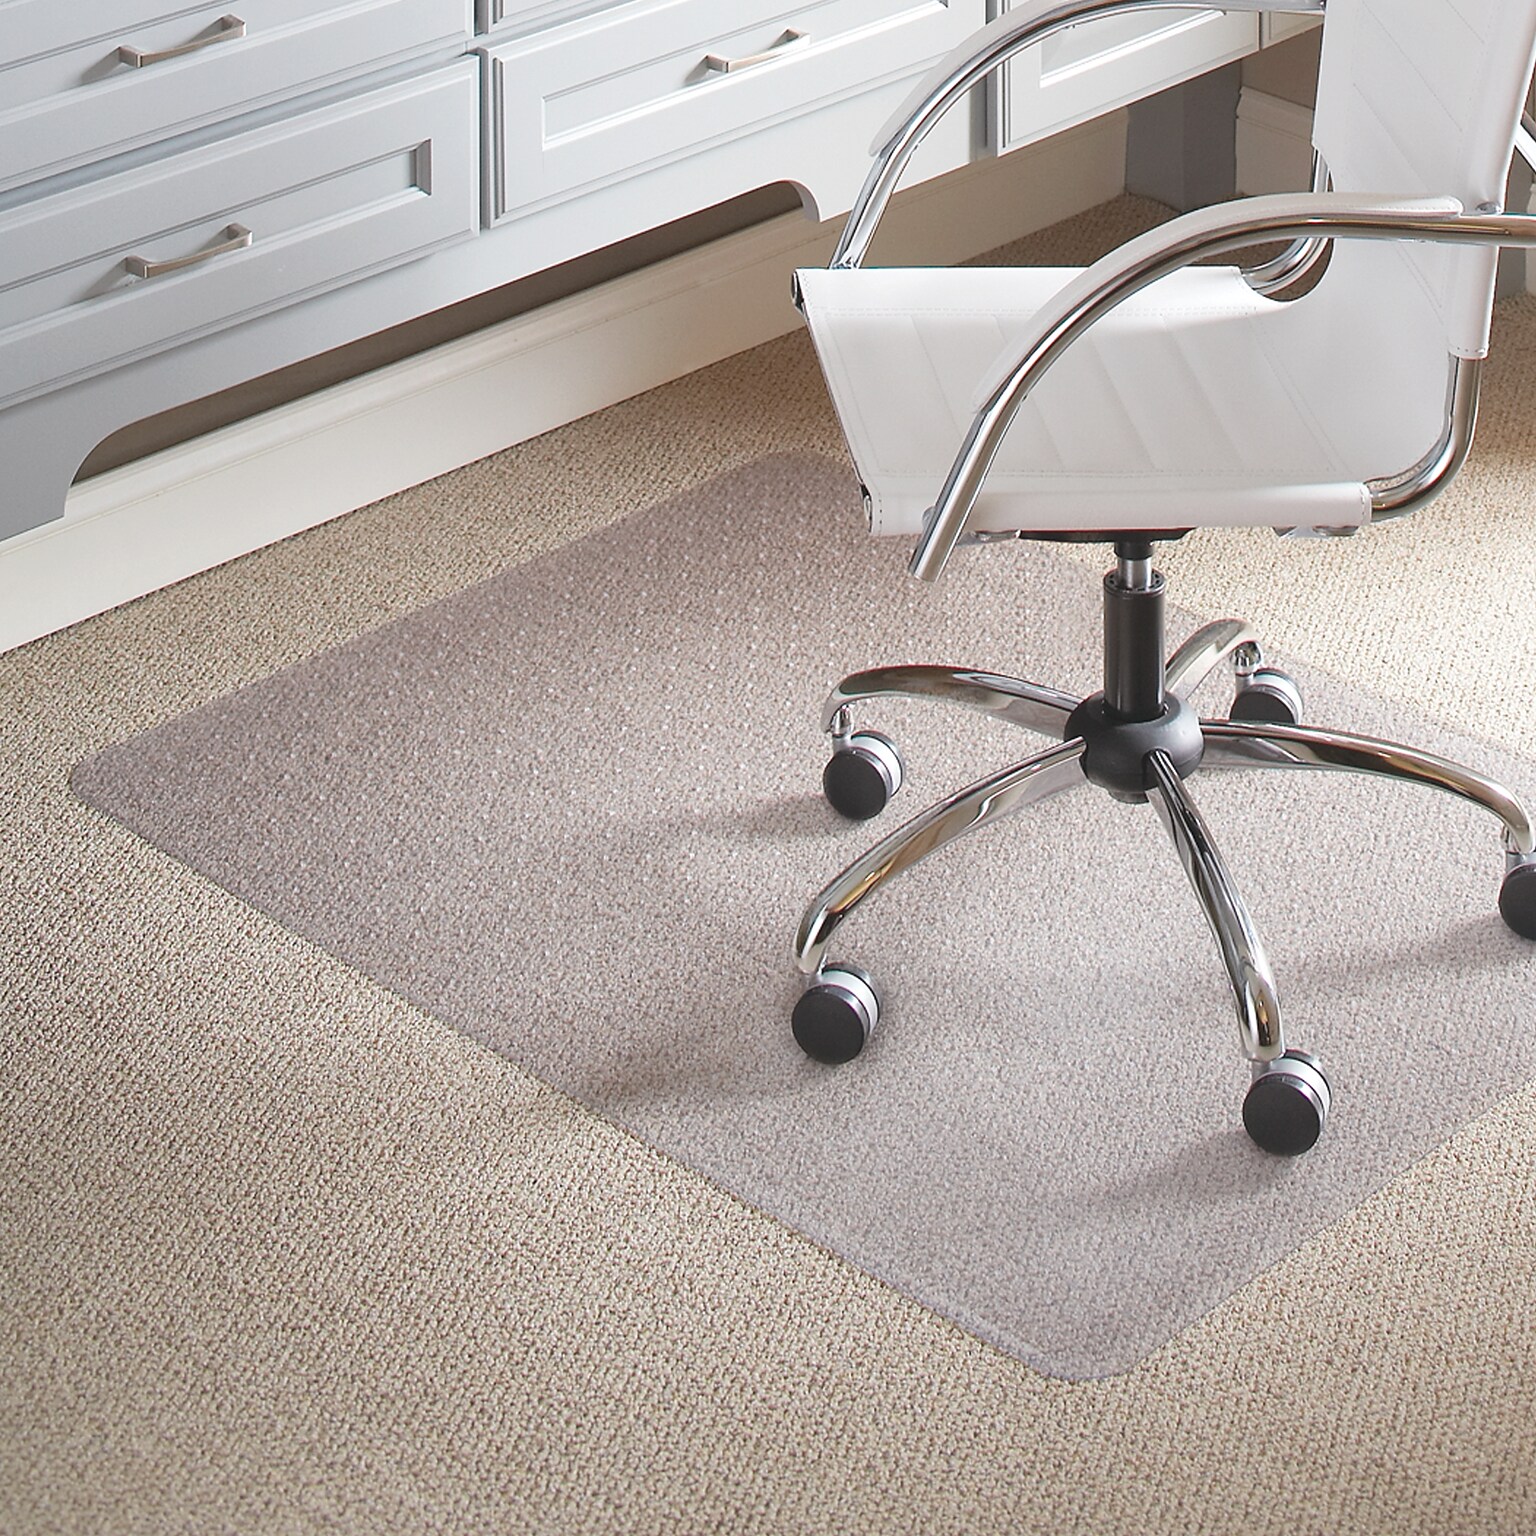 ES Robbins EverLife 46 x 60 Chair Mat for Low Pile Carpet, Vinyl (128371)